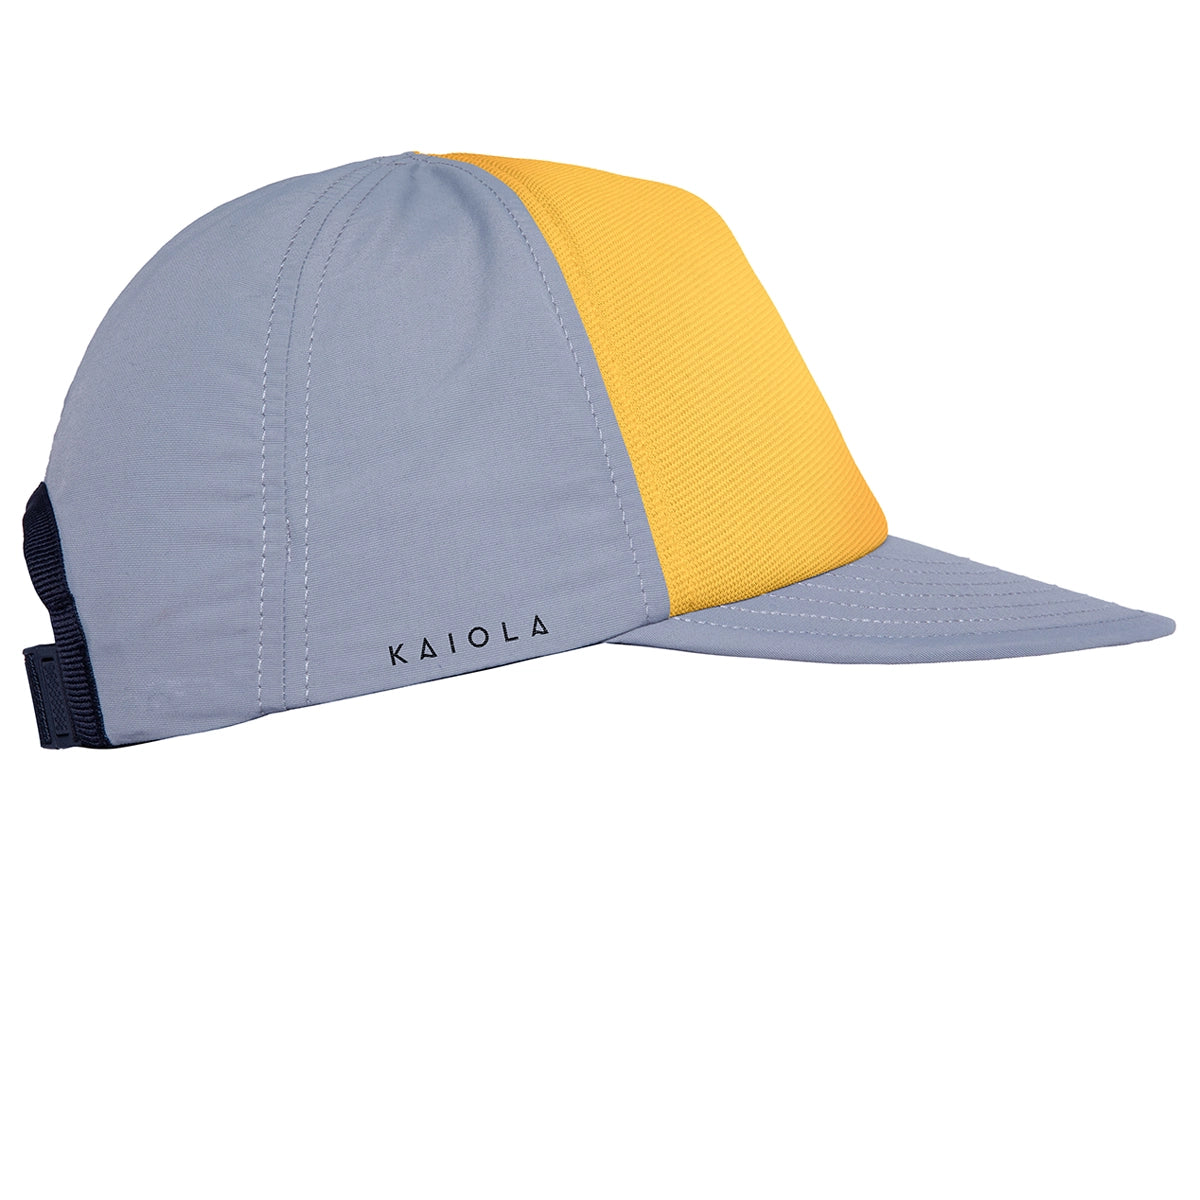 Kaiola Surf Hat - Mellow Yellow